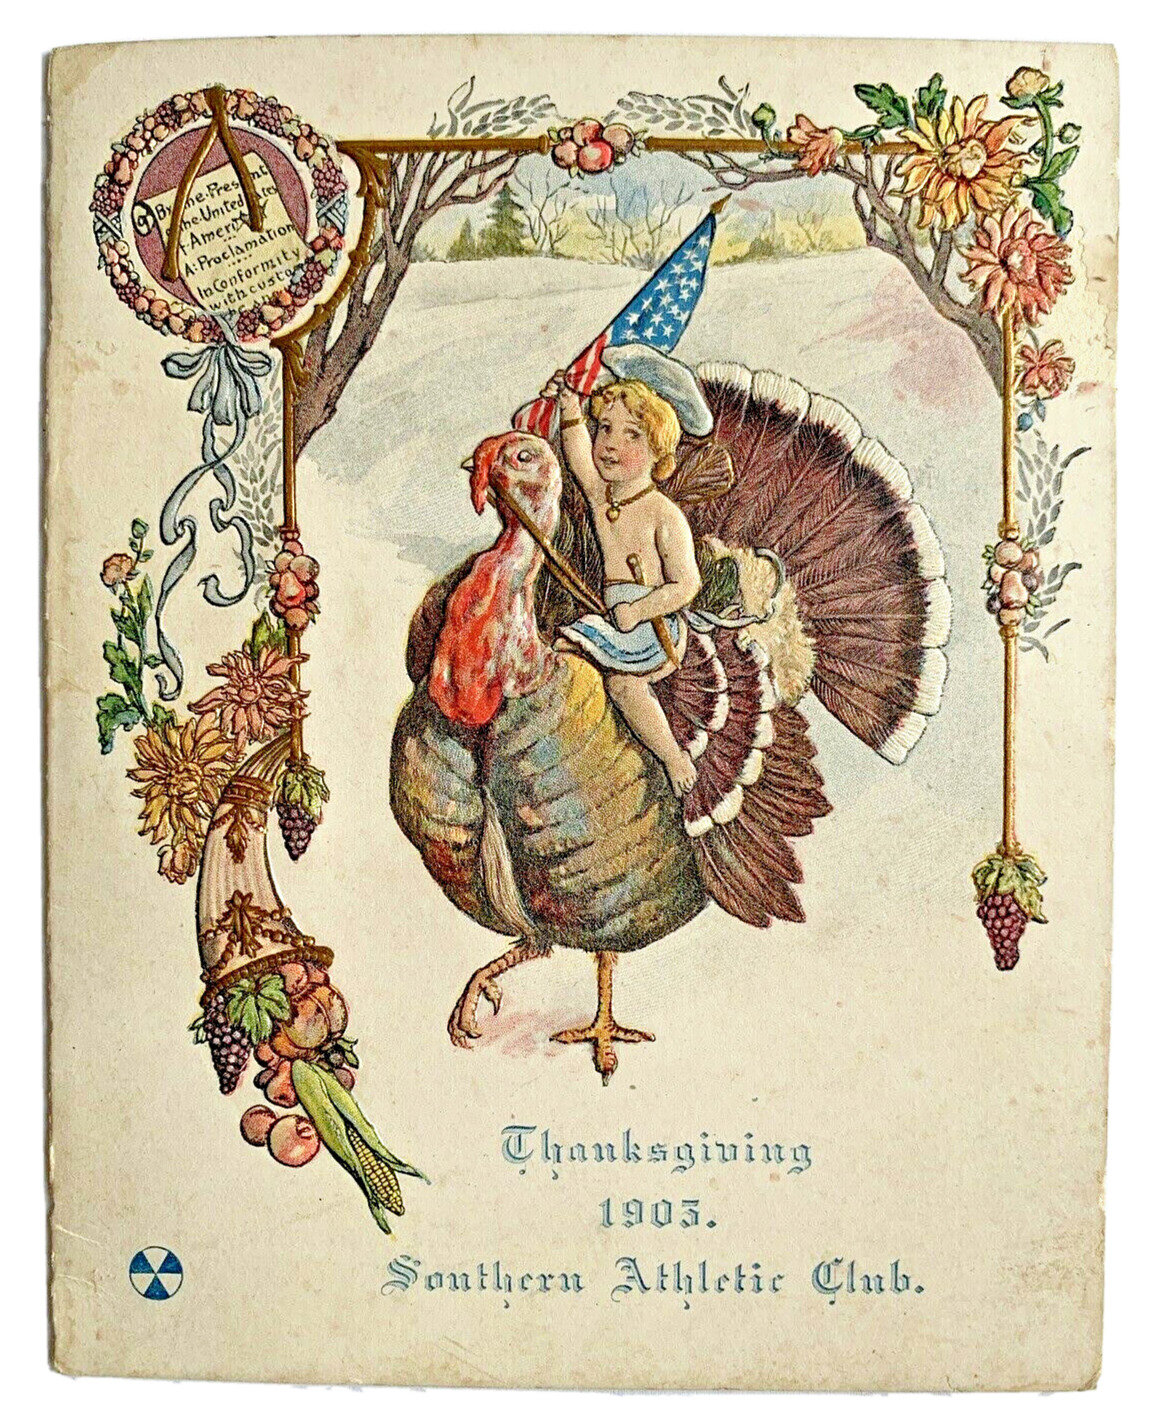 Thanksgiving 1903, New Orleans Memorabilia, Southern Athletic Club Program